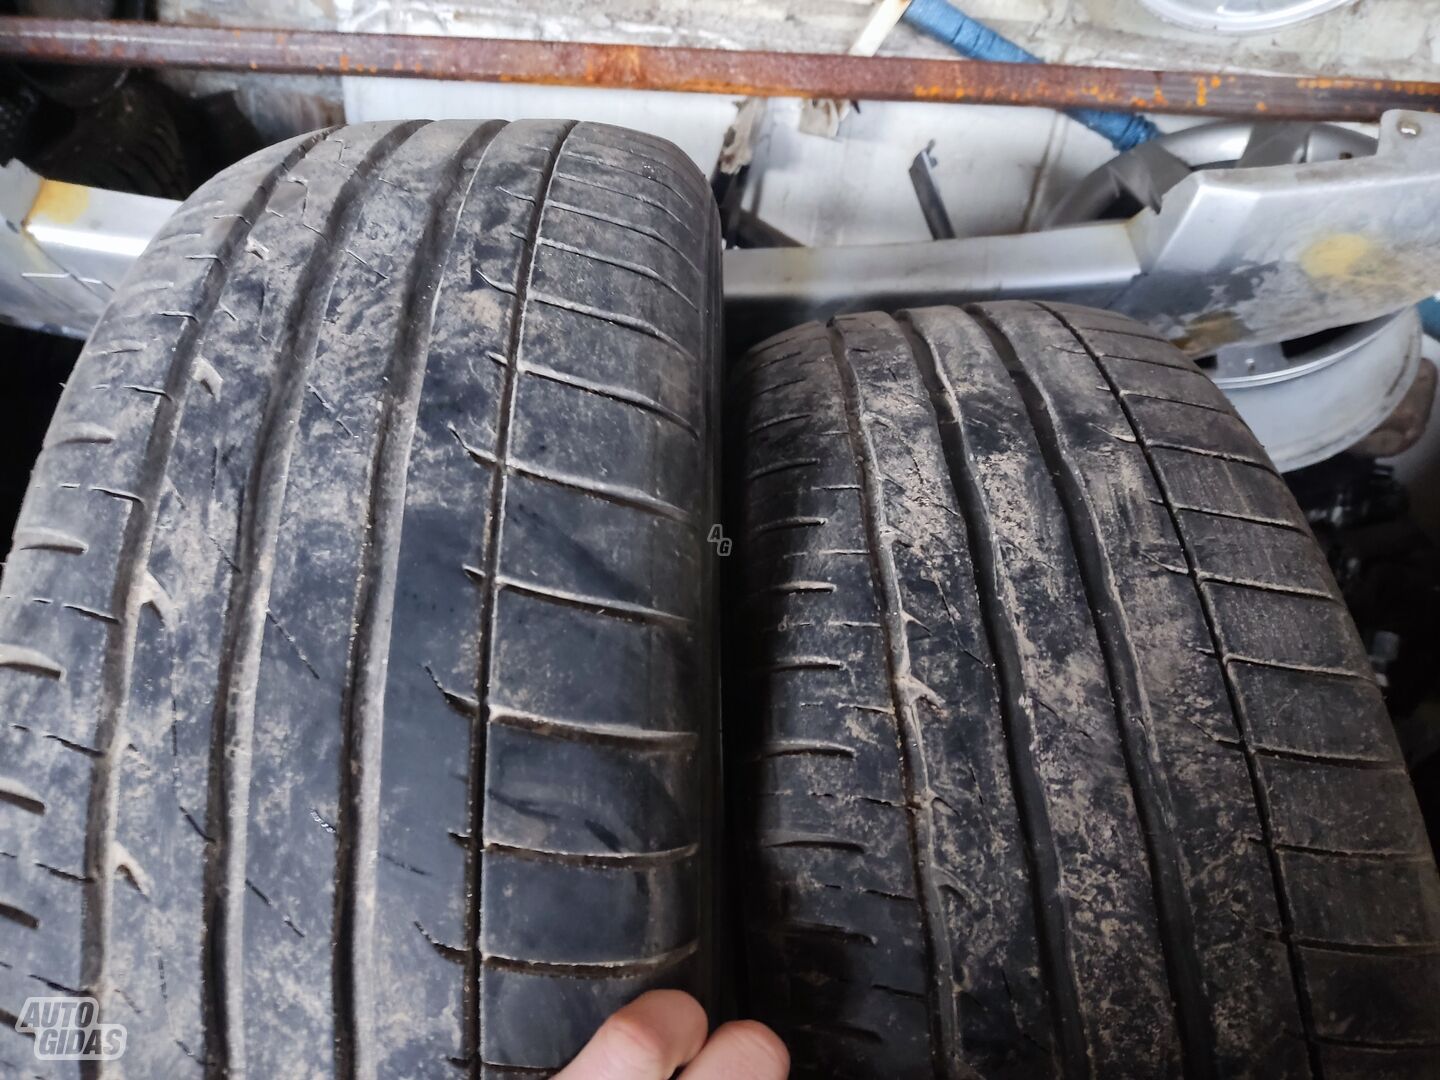 R18 summer tyres passanger car